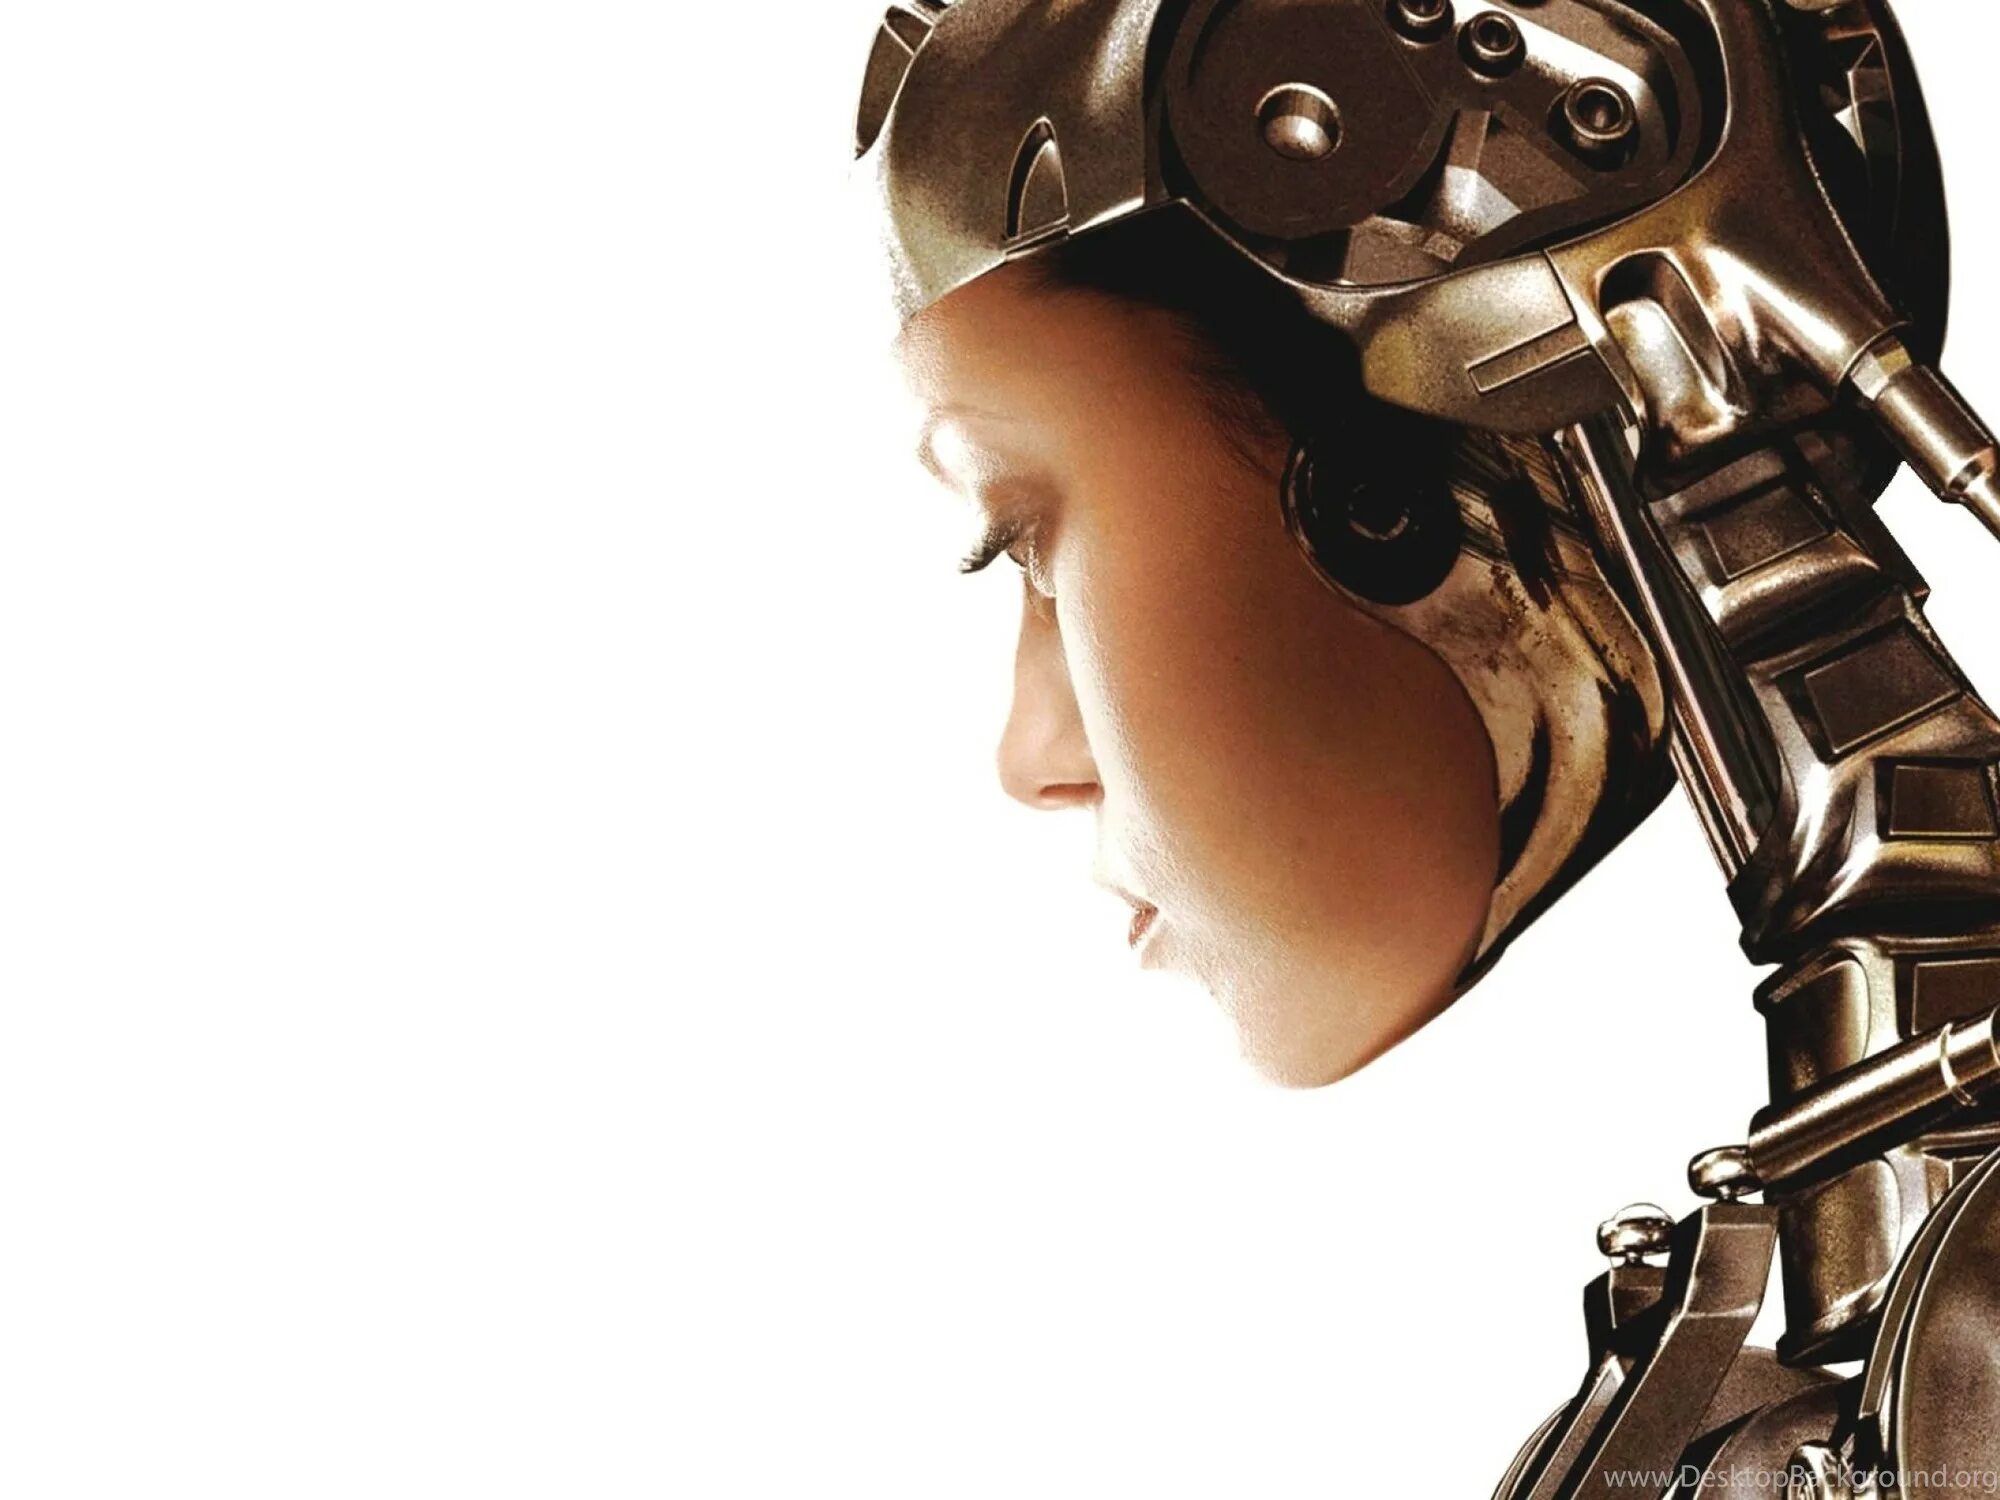 Моя девушка робот 2024. Саммер Глау киборг. Саммер Глау Терминатор робот. Девушка робот. Робо девушки.